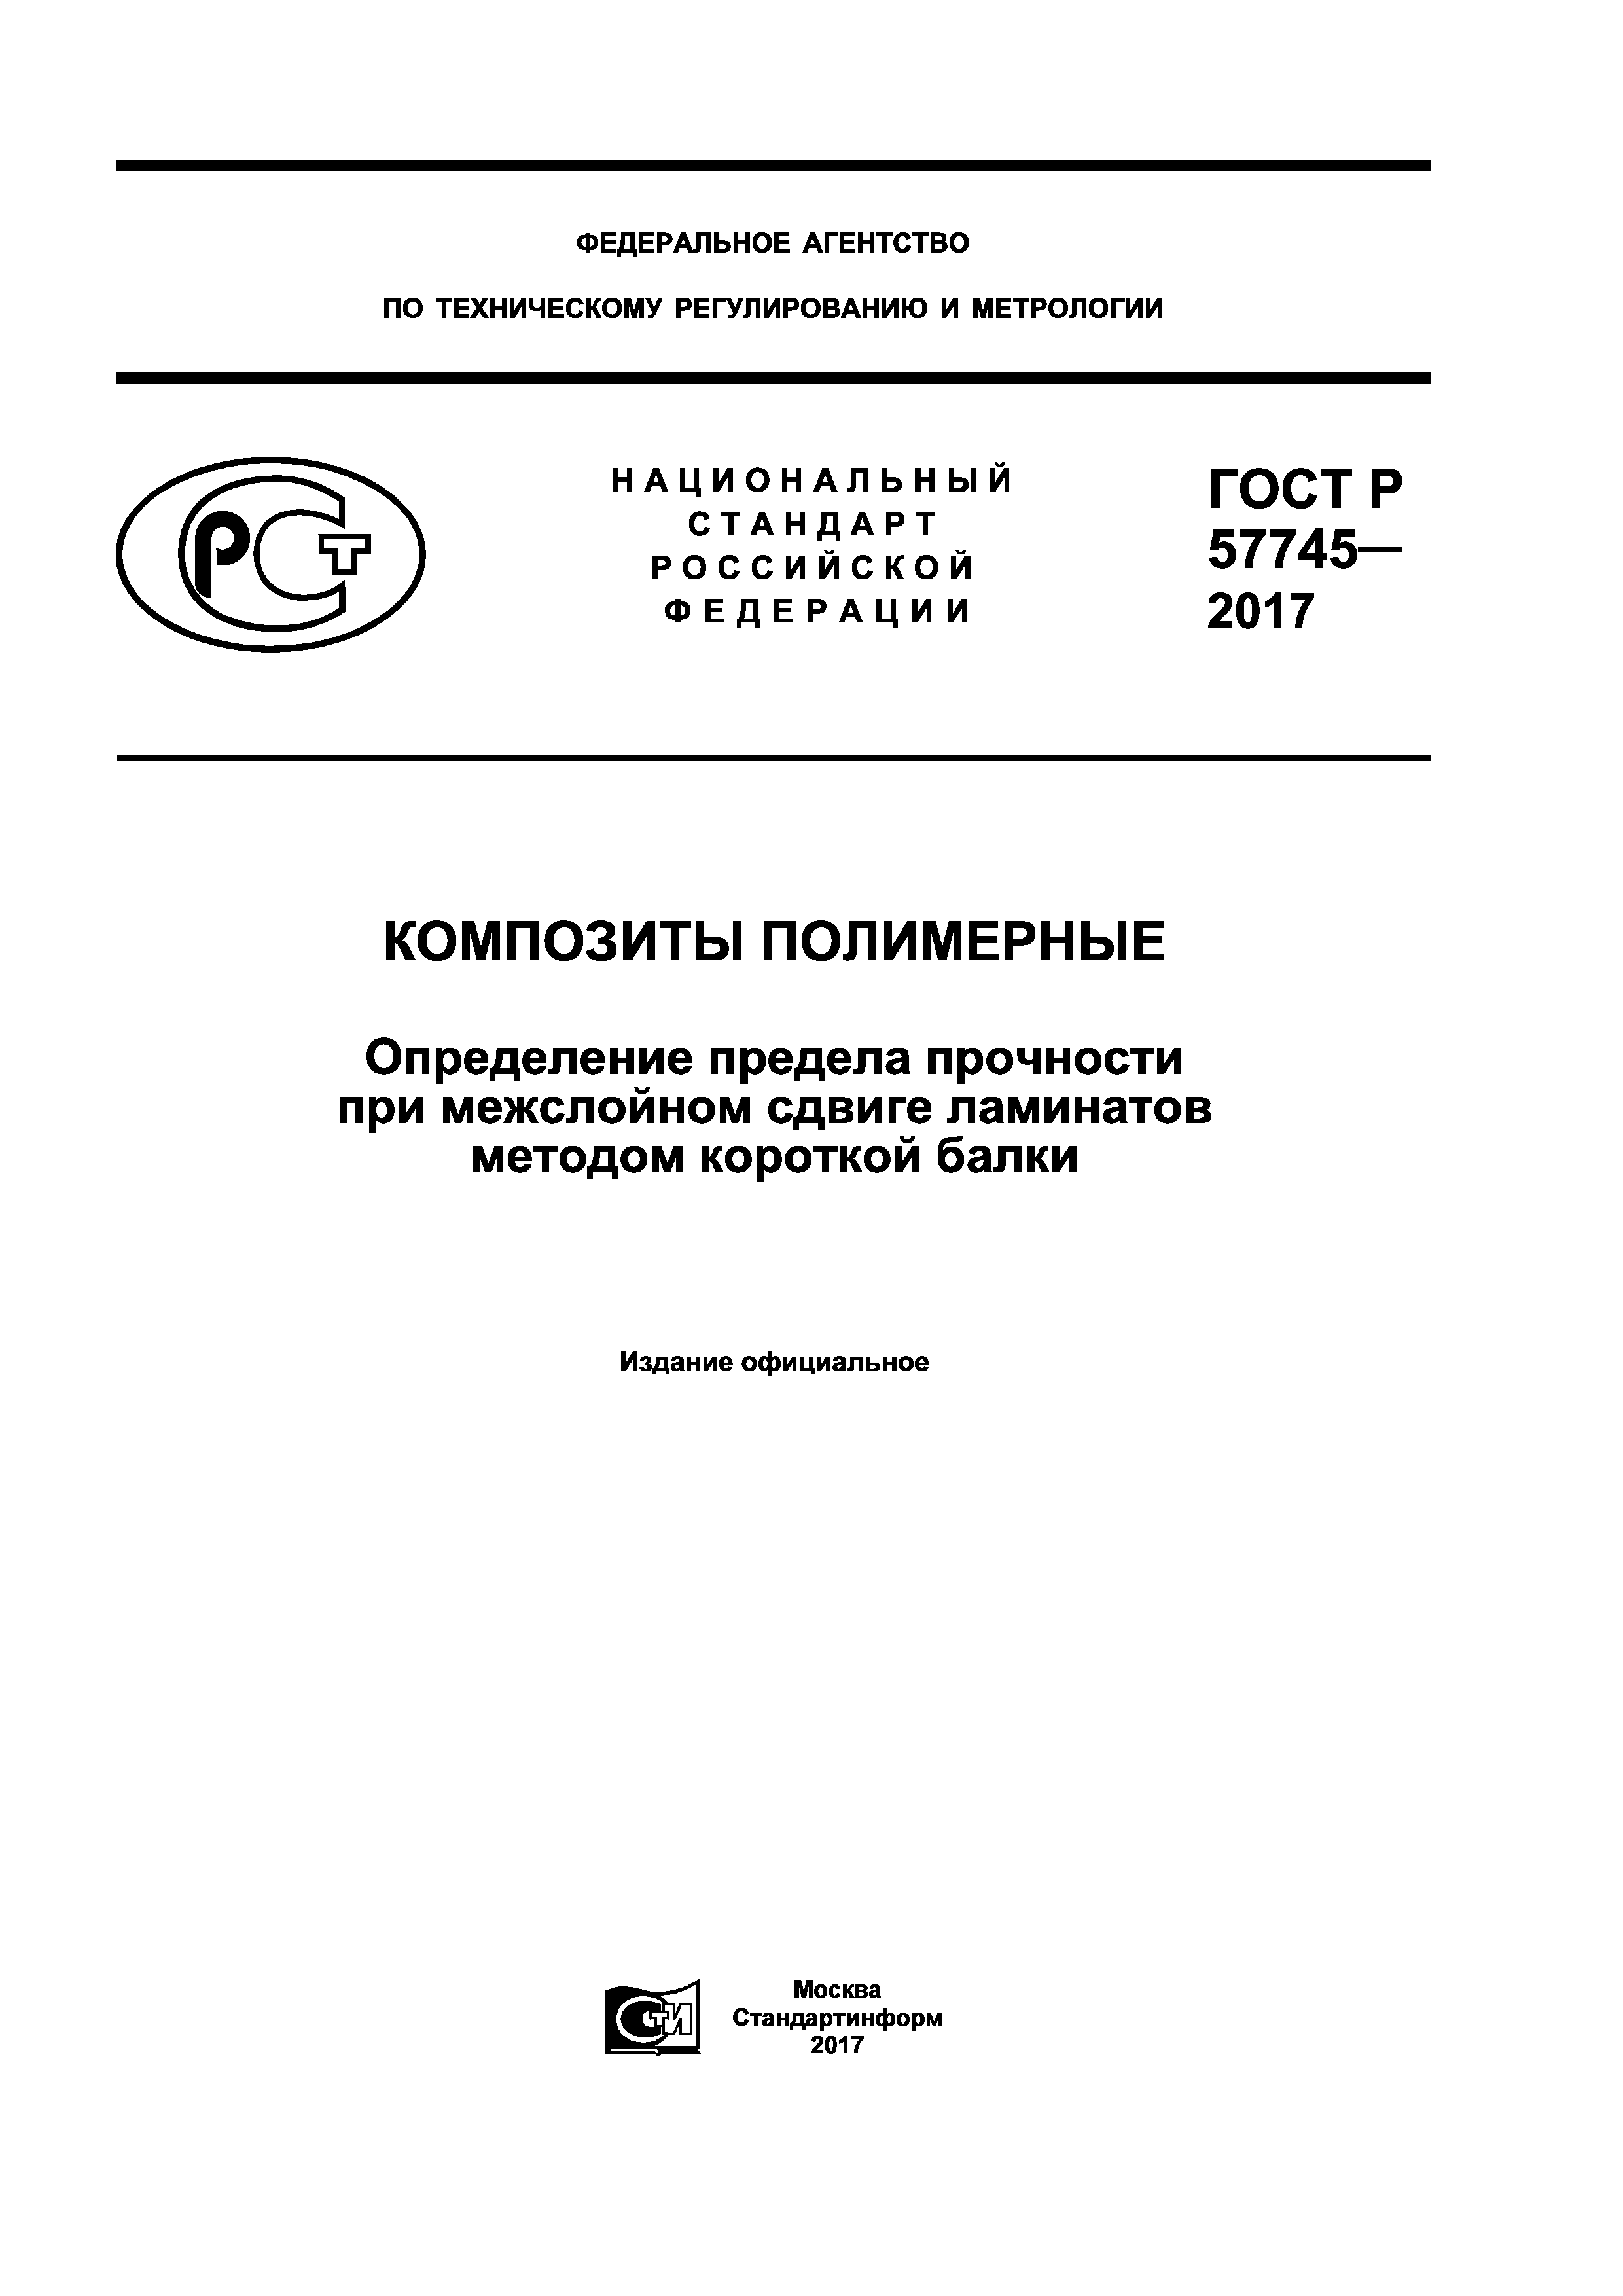 ГОСТ Р 57745-2017